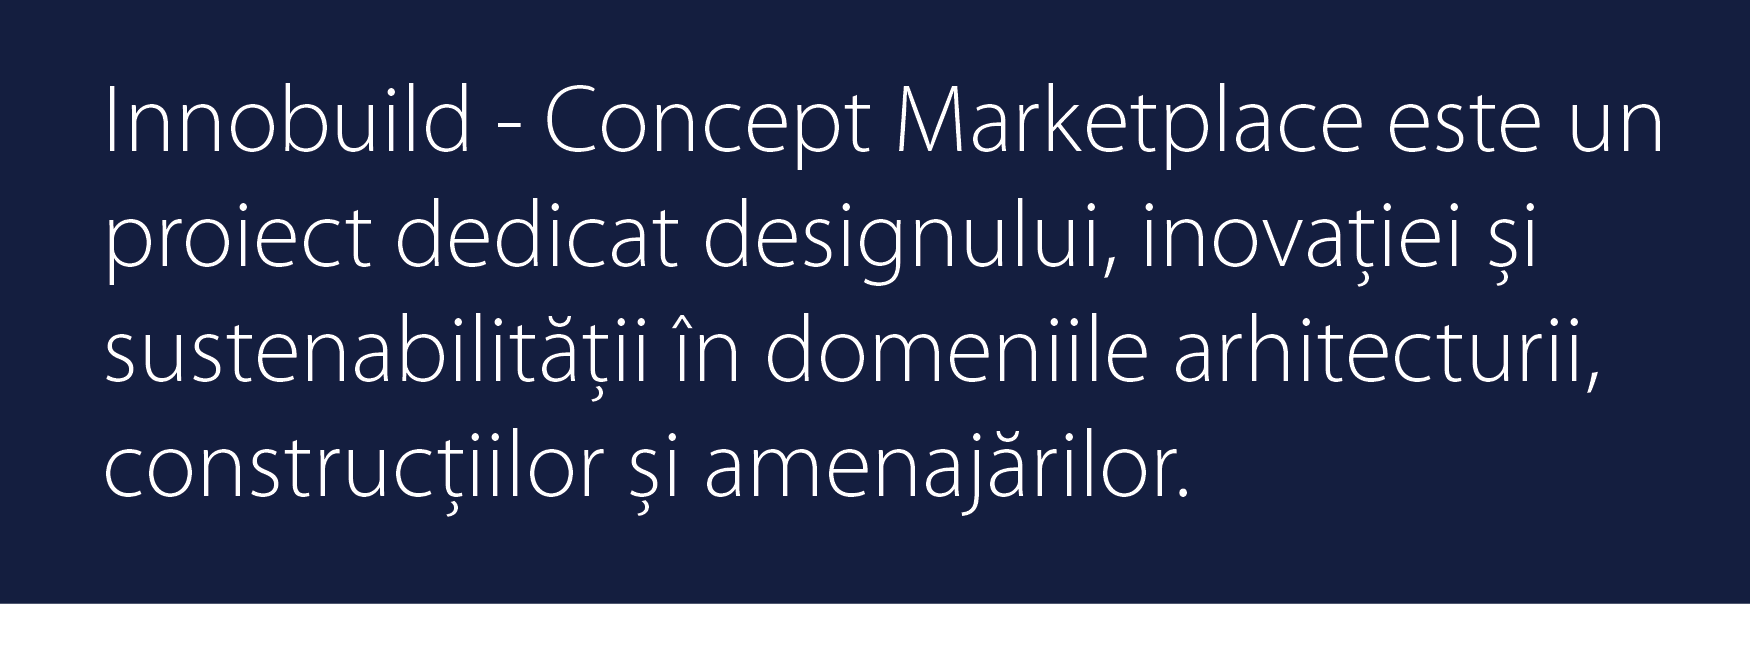 Concept Marketplace